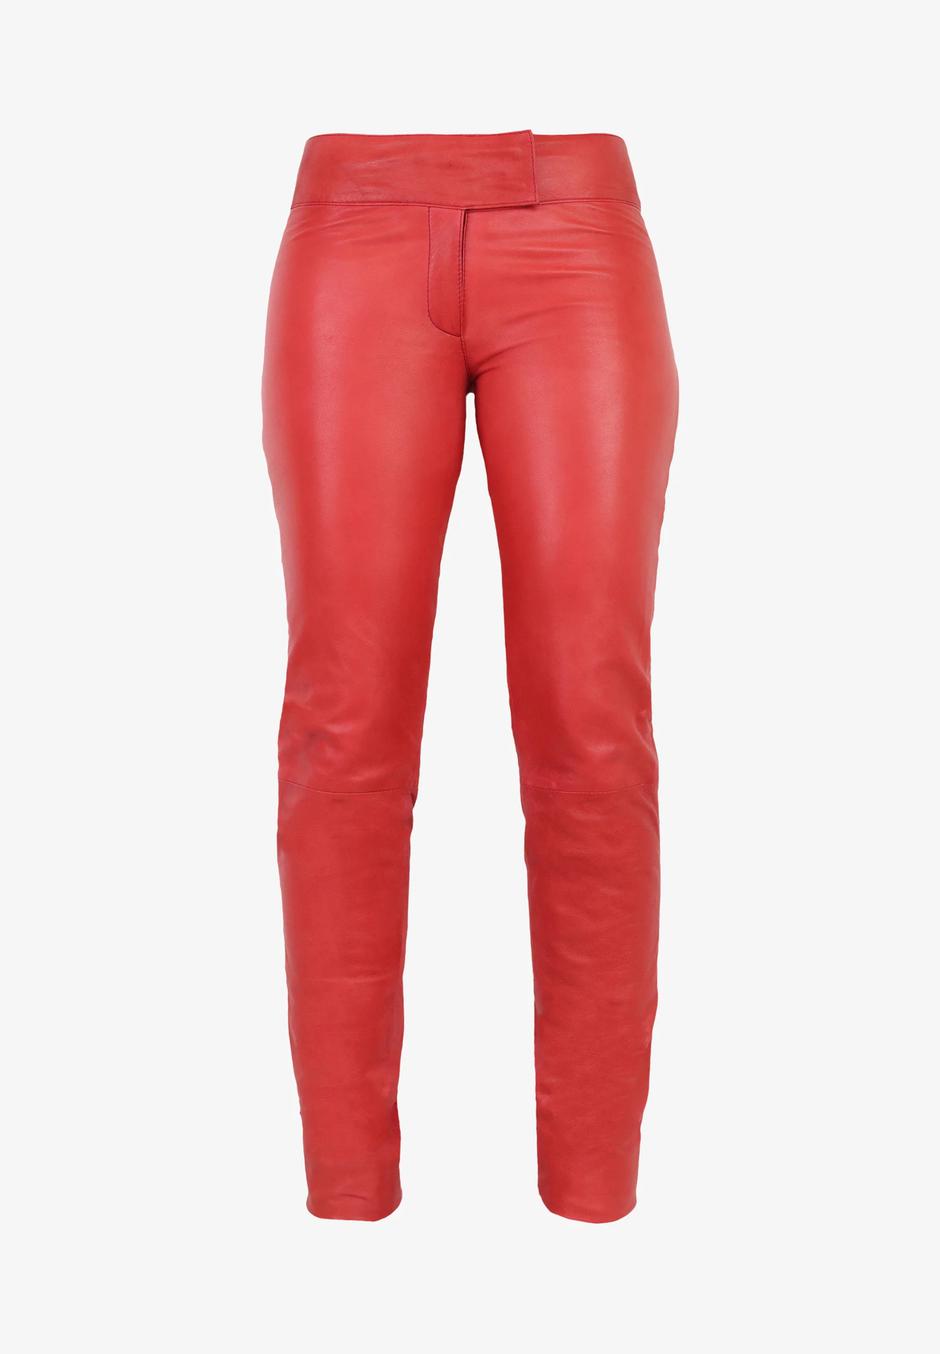 Foto: Ricano, crvene kožne hlače (289 eura) | Autor: 